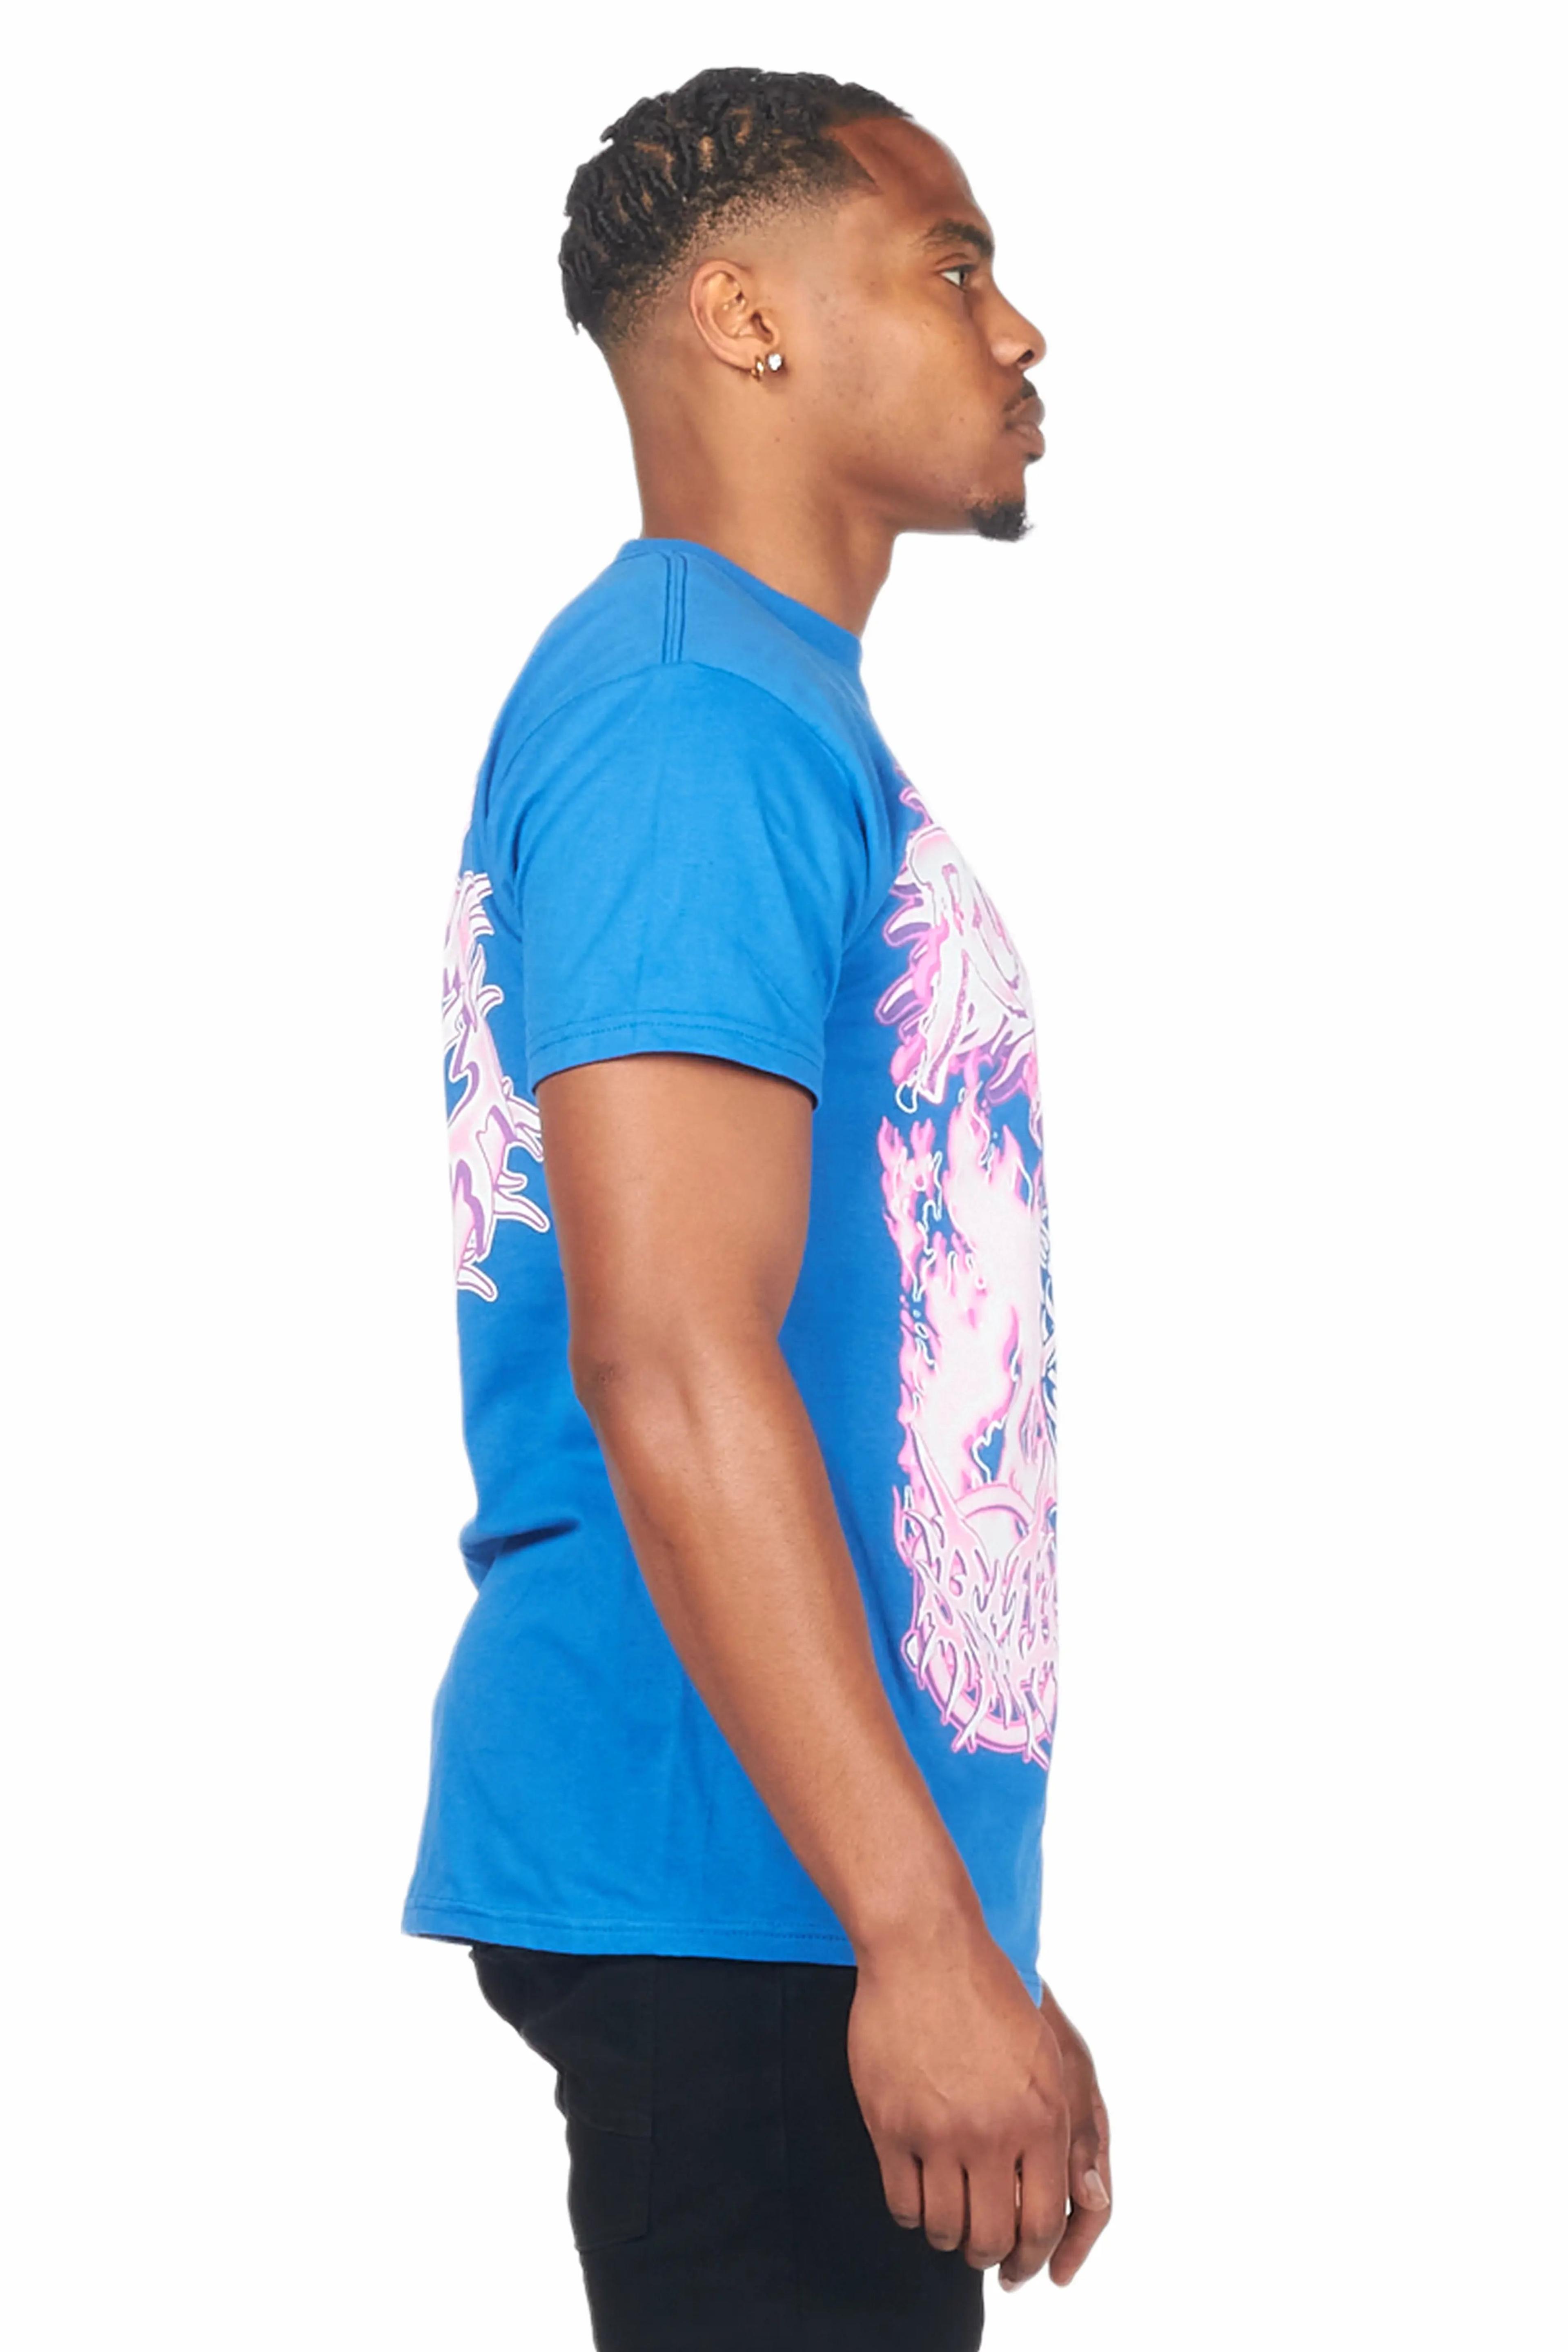 Alternate View 2 of Yoga Royal Blue Graphic T-Shirt